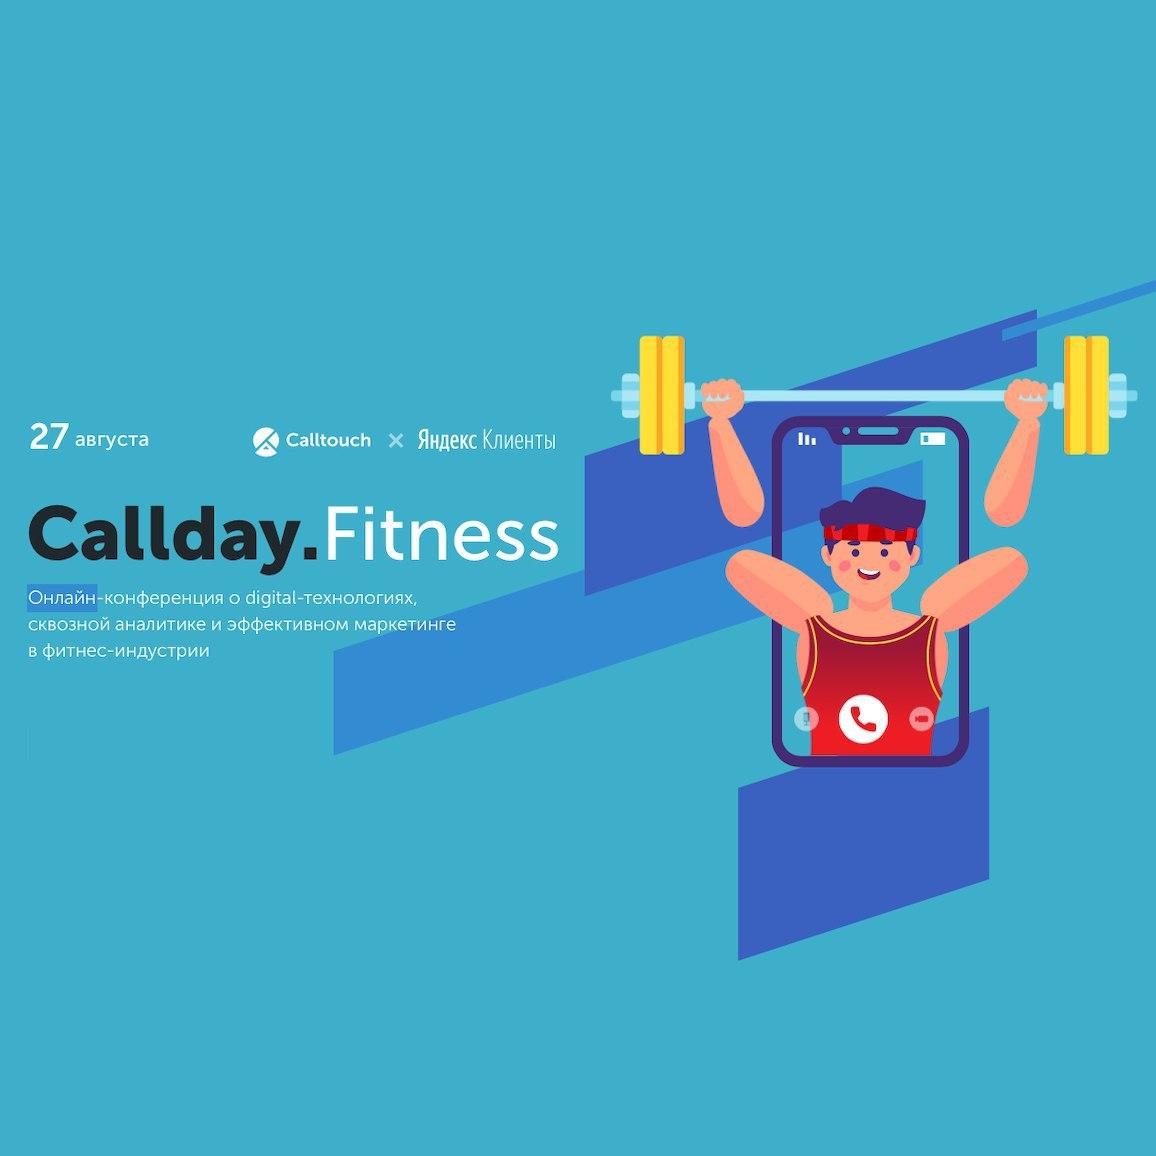 Callday.Fitness